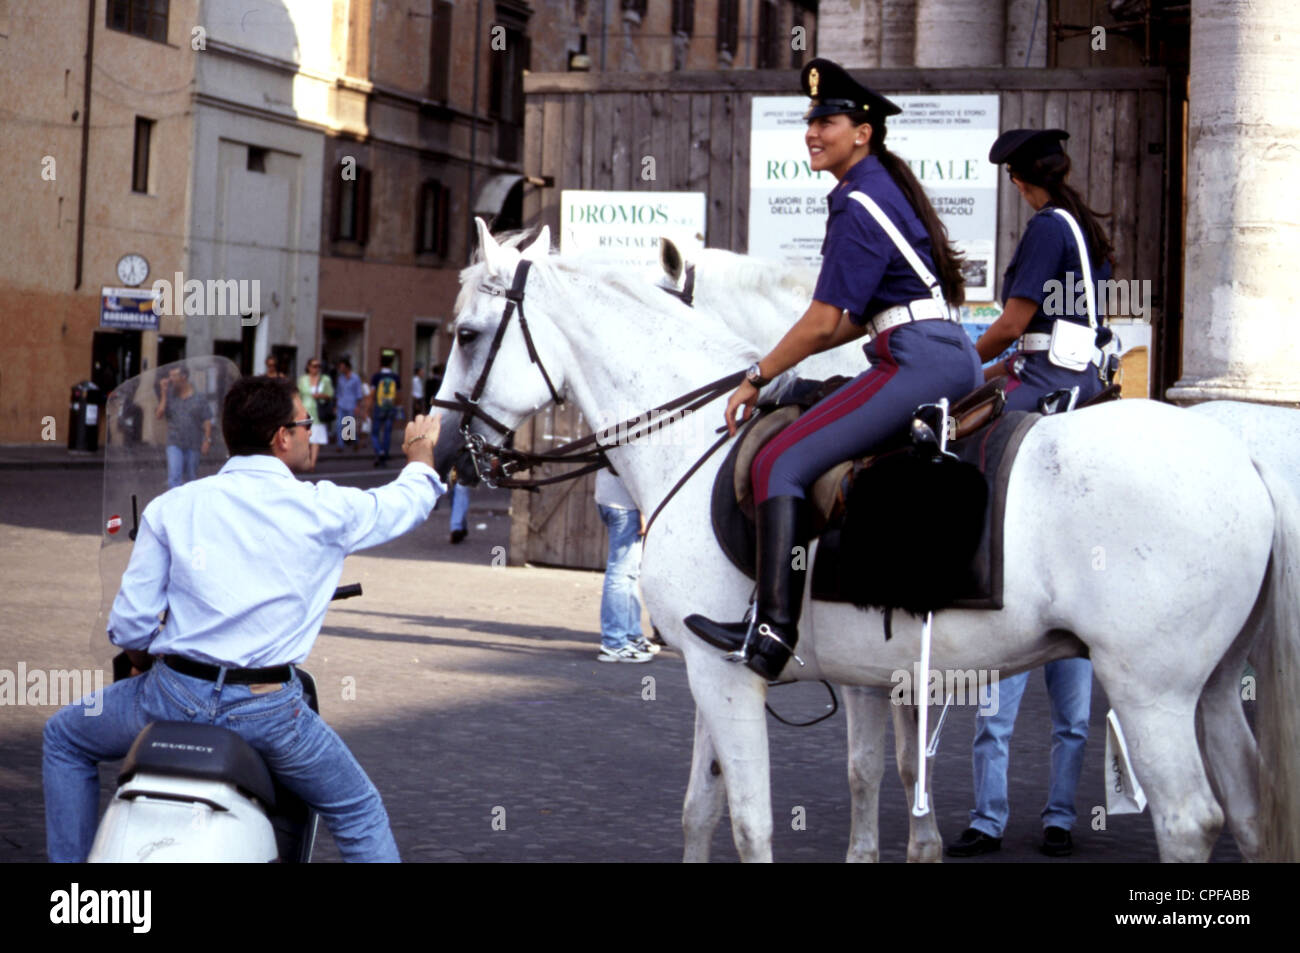 Policewomen on horseback speaking with a man Stock Photo